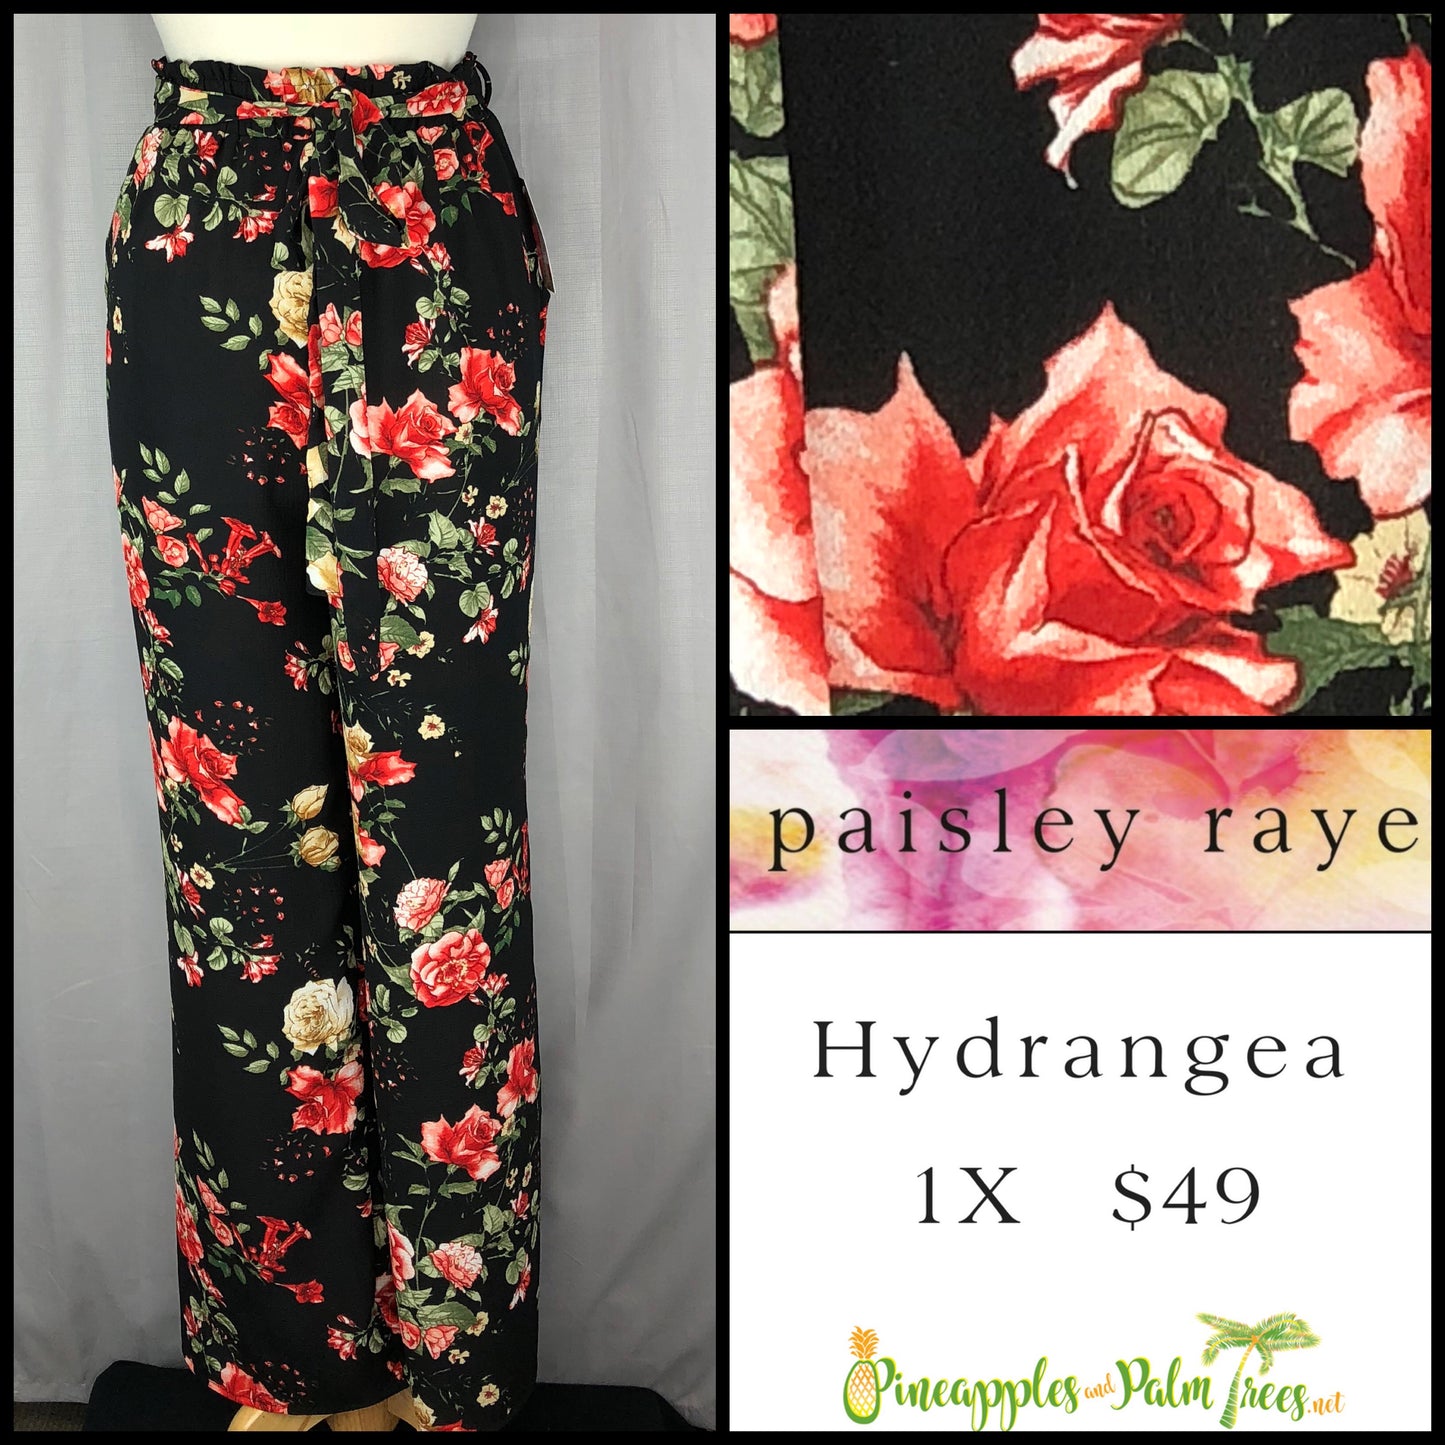 Pants: Hydrangea 1X - black floral